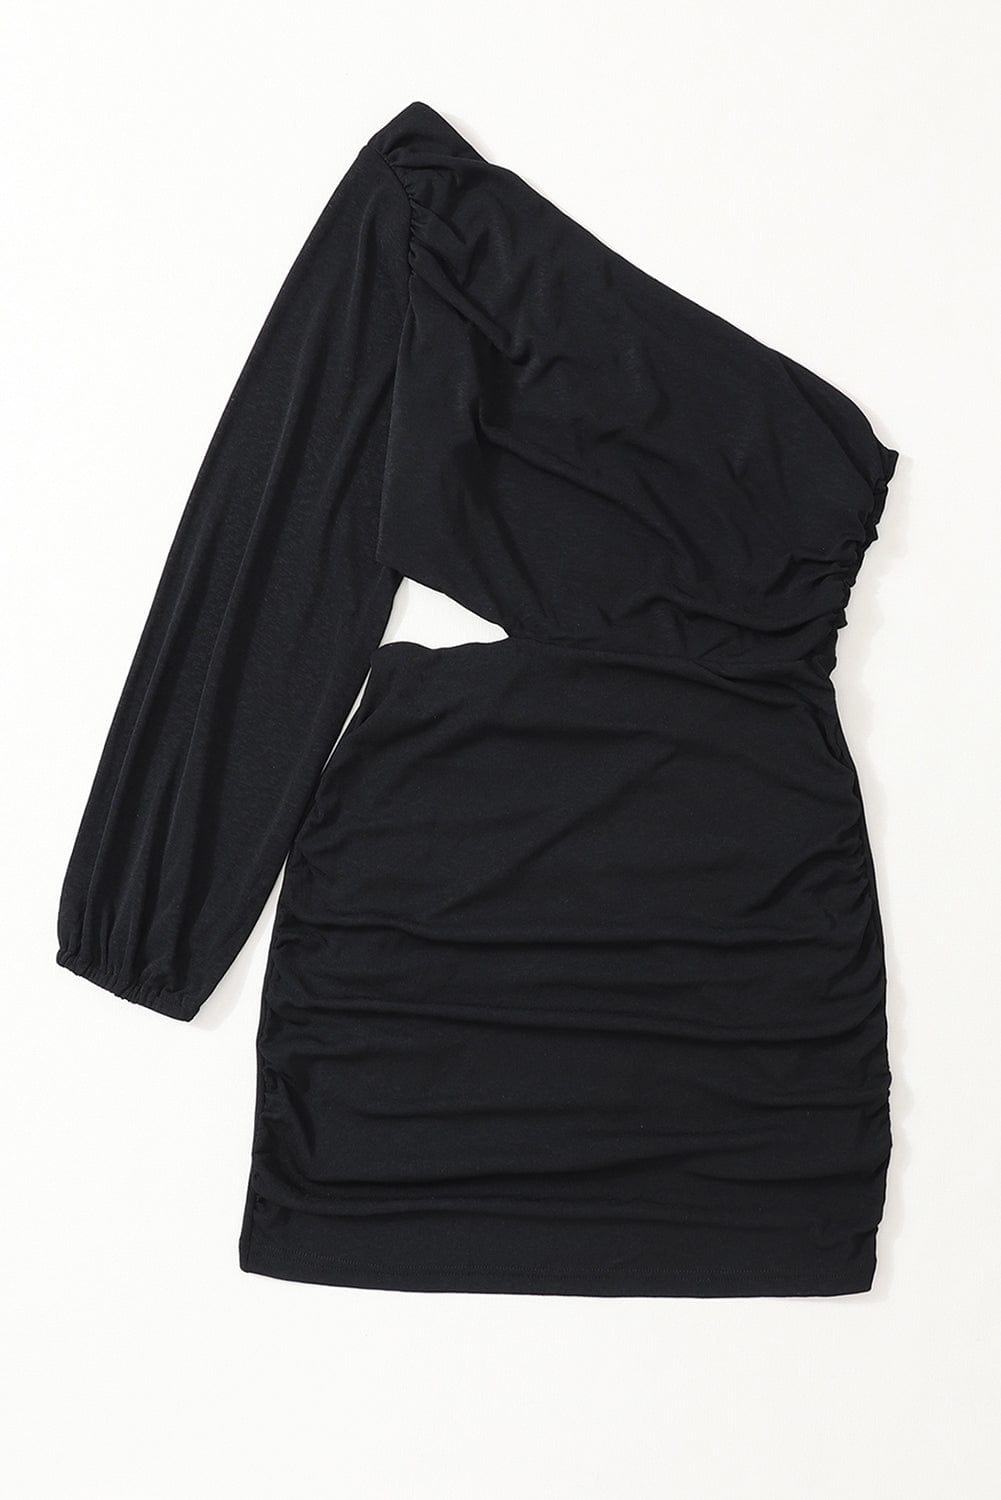 Shoppe EZR Dresses Black  Asymmetric One Shoulder Cutout Bodycon Dress